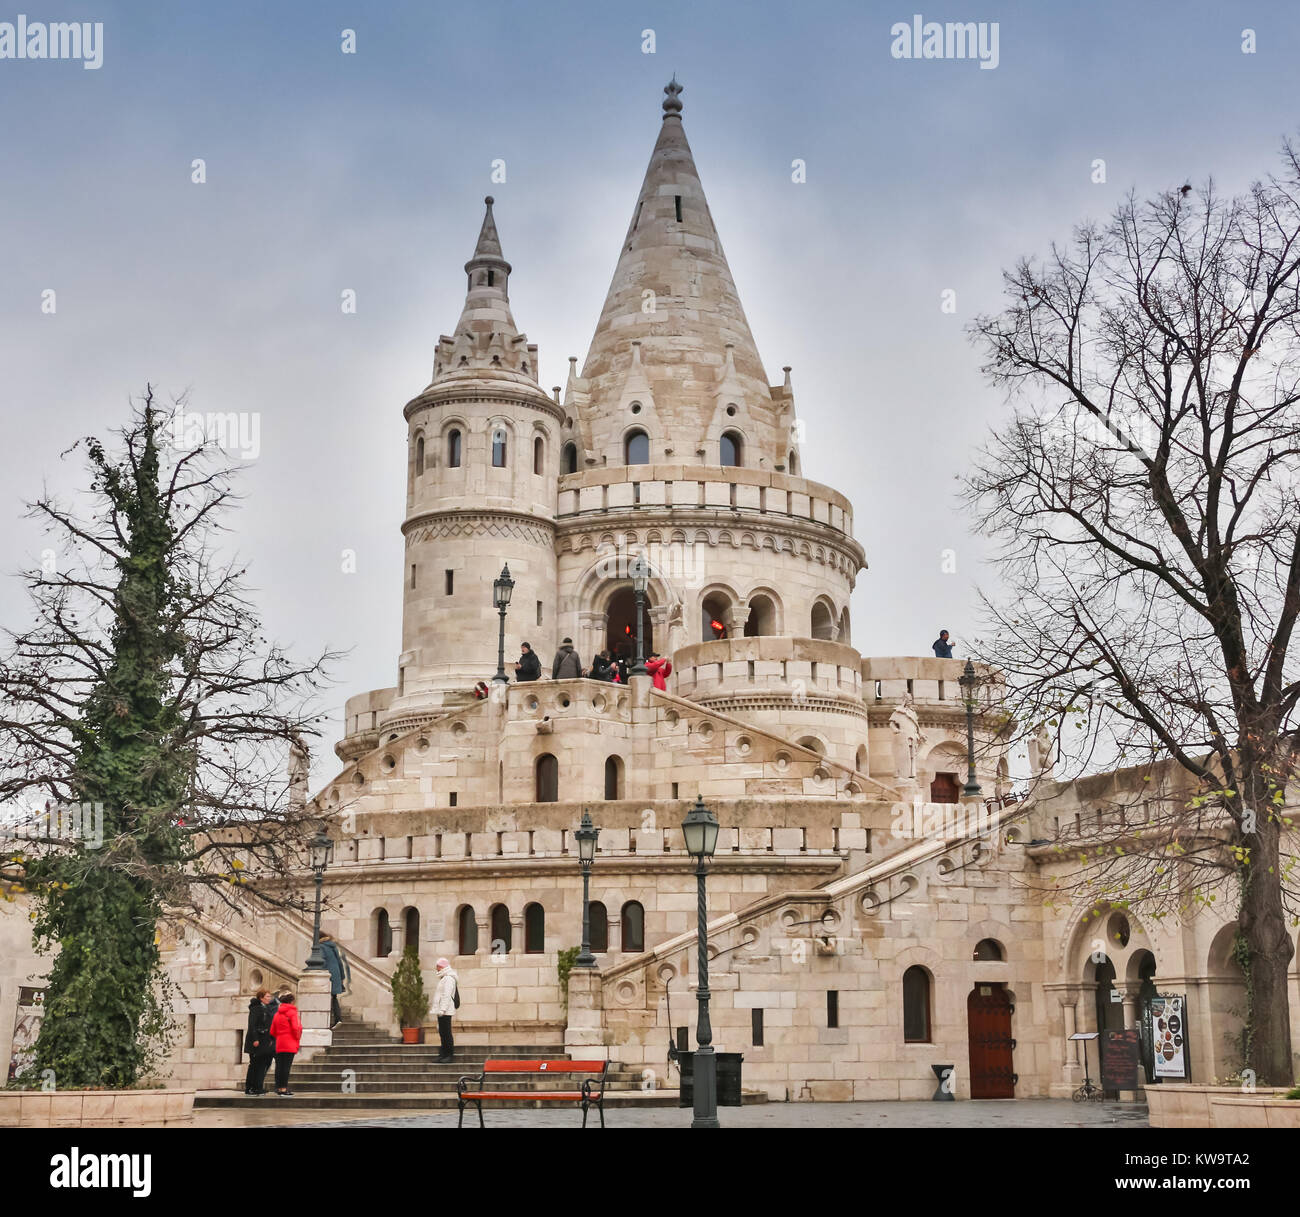 BUDAPEST, HUNGARY - FEBRUARY 20, 2016: Tower of Fisherman's Bastion in Budapest, Hungary Stock Photo